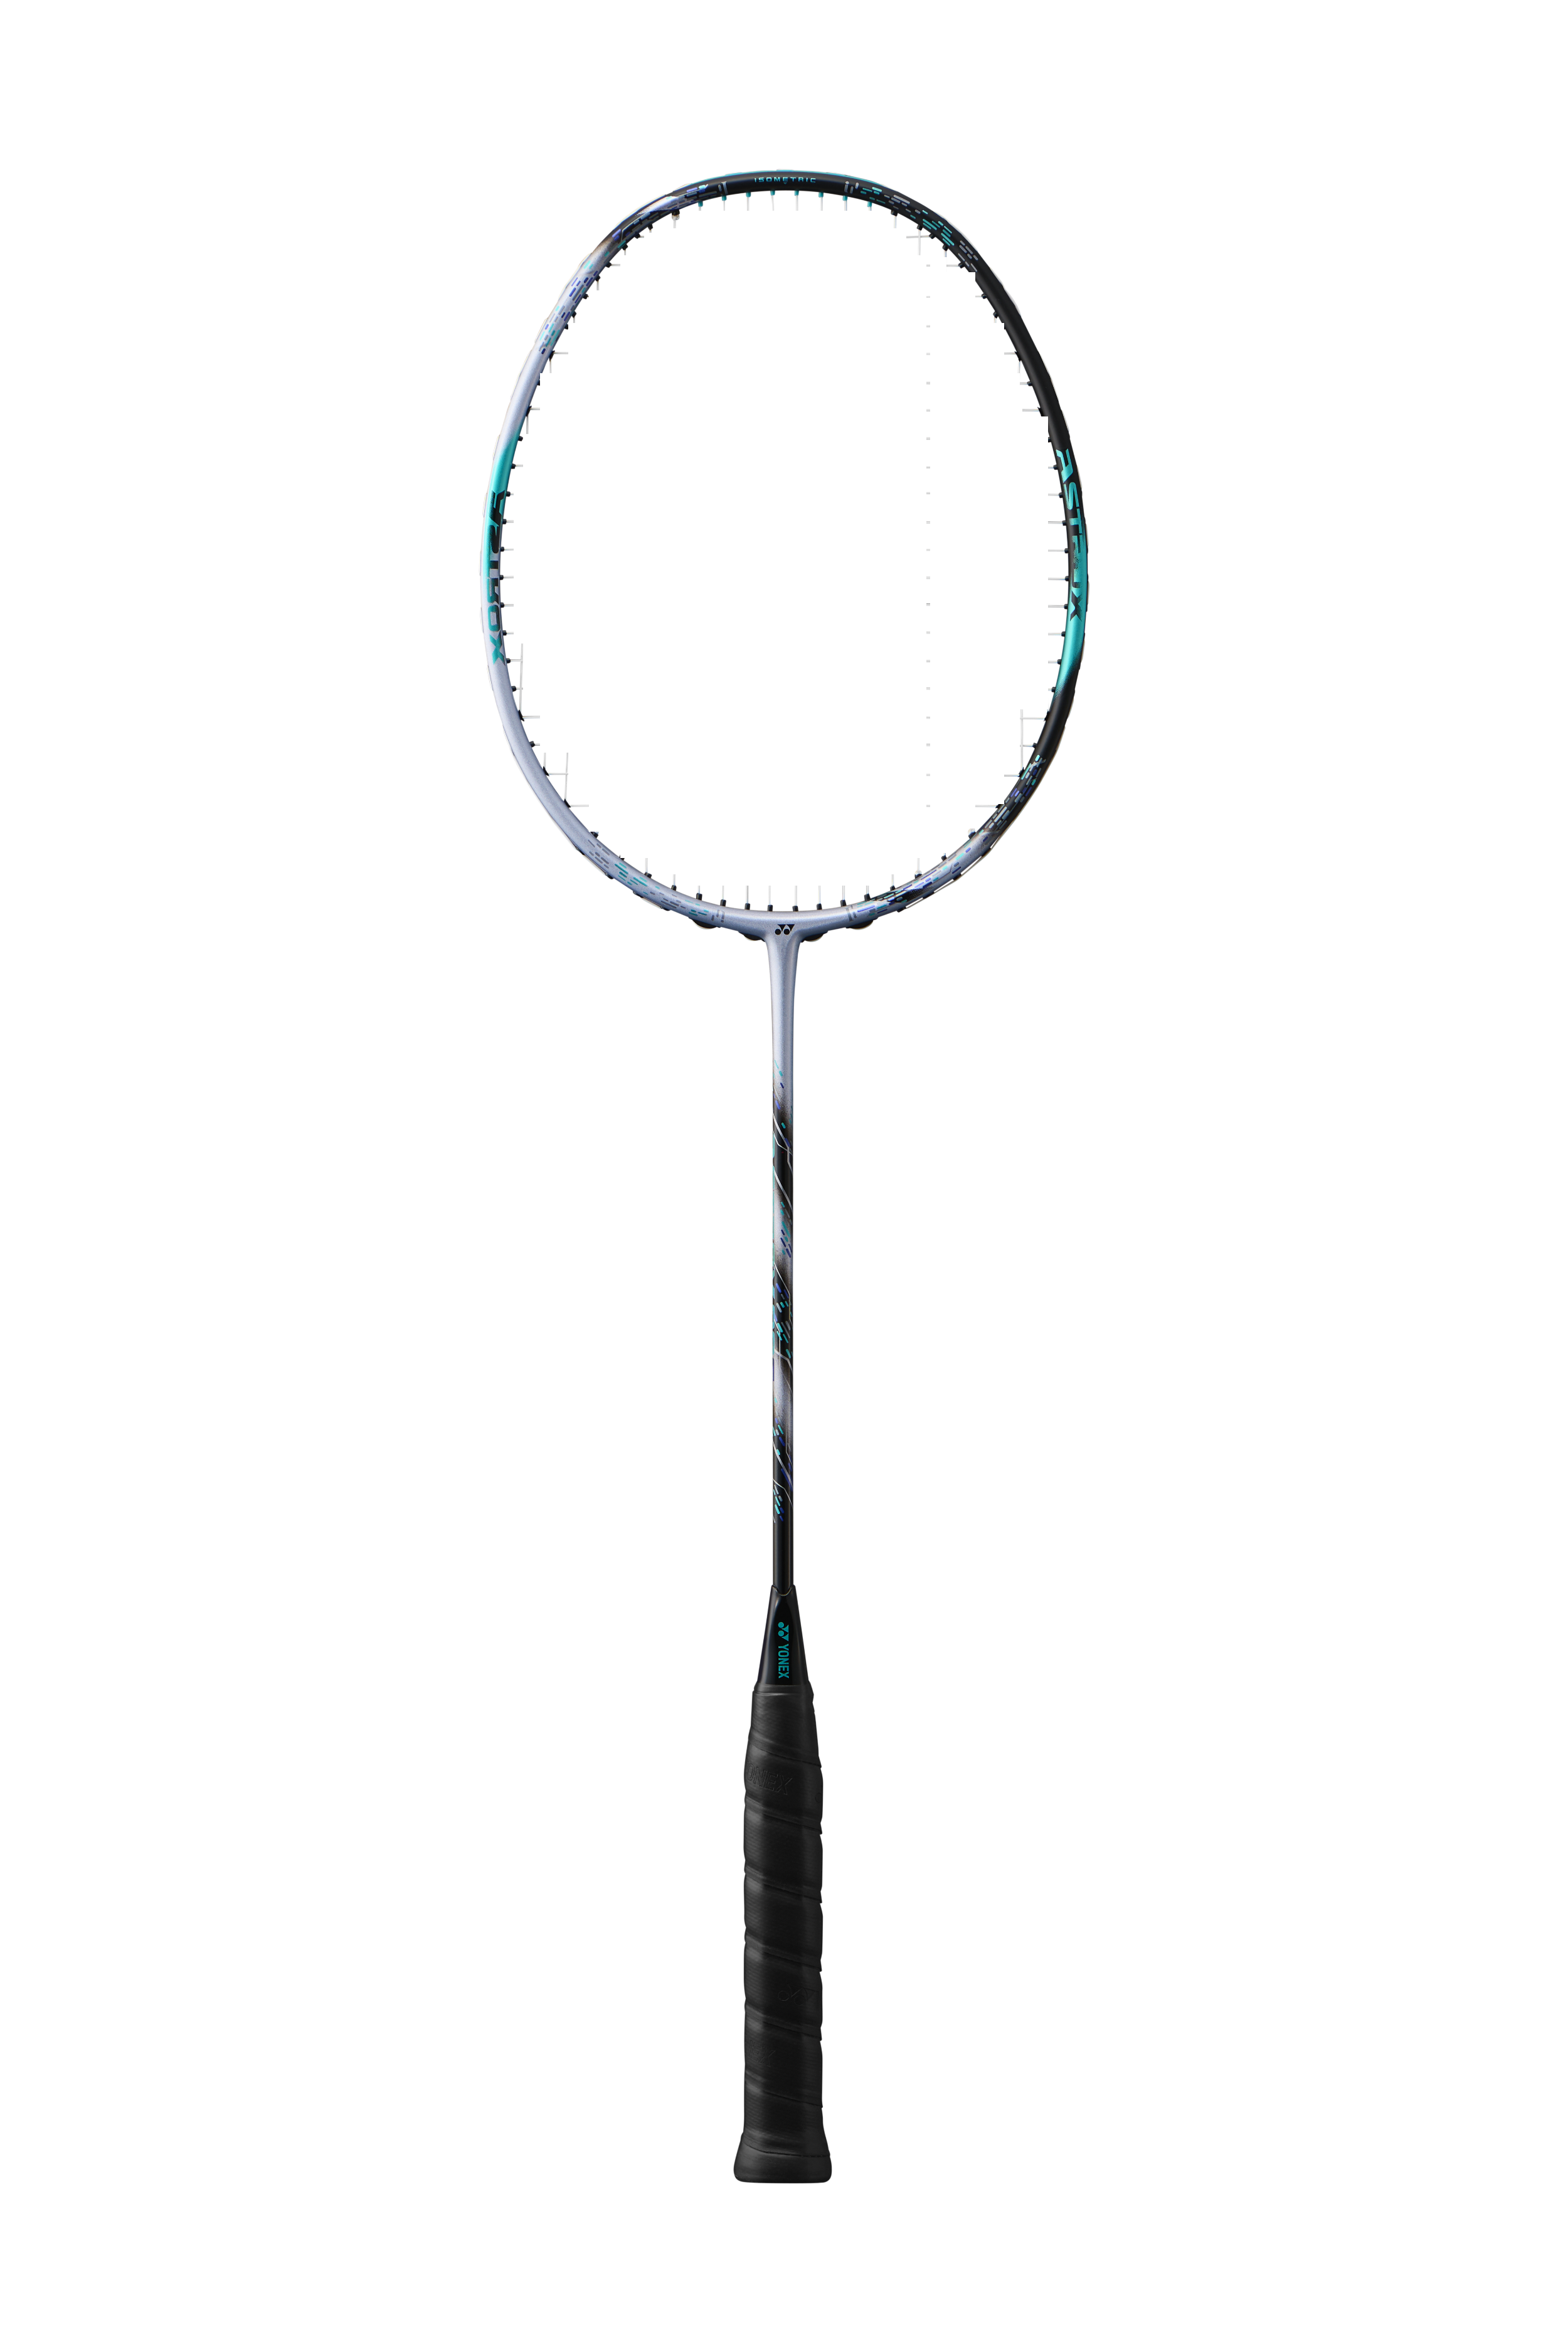 YONEX Badminton Racket - Astrox 88S PRO - 3AX88S-P - Silver/Black - Frame only